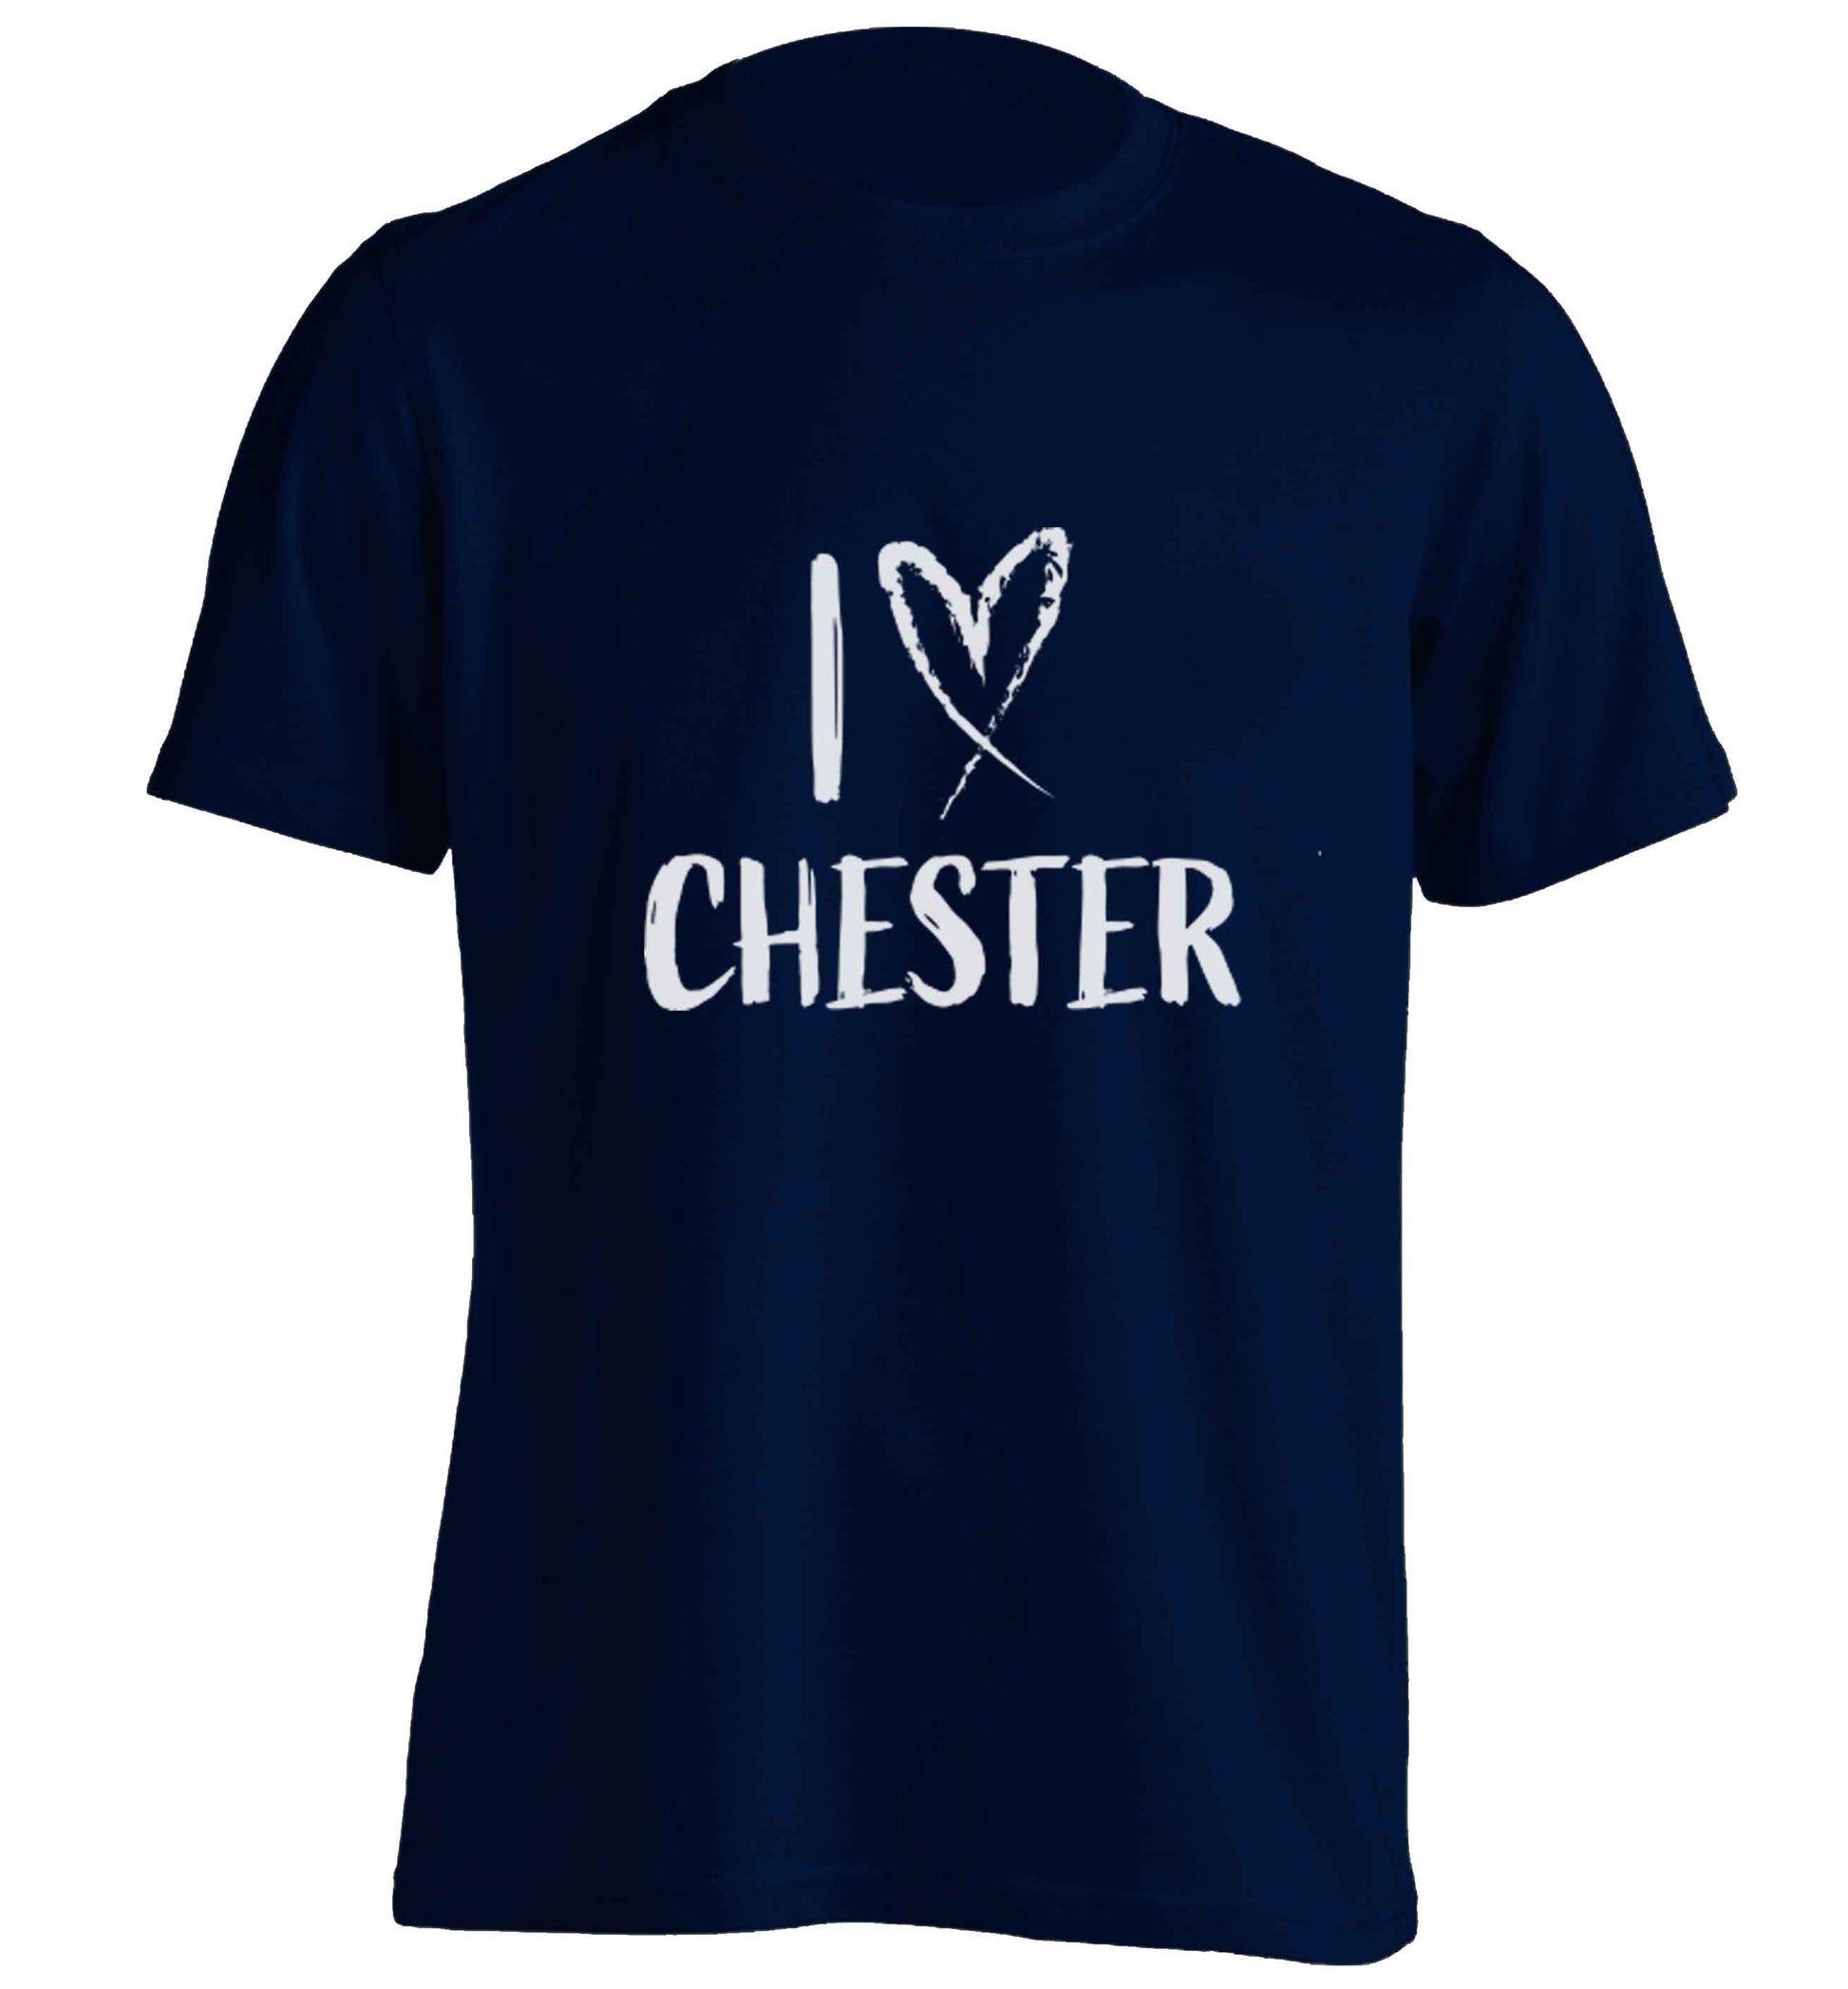 I love Chester adults unisex navy Tshirt 2XL